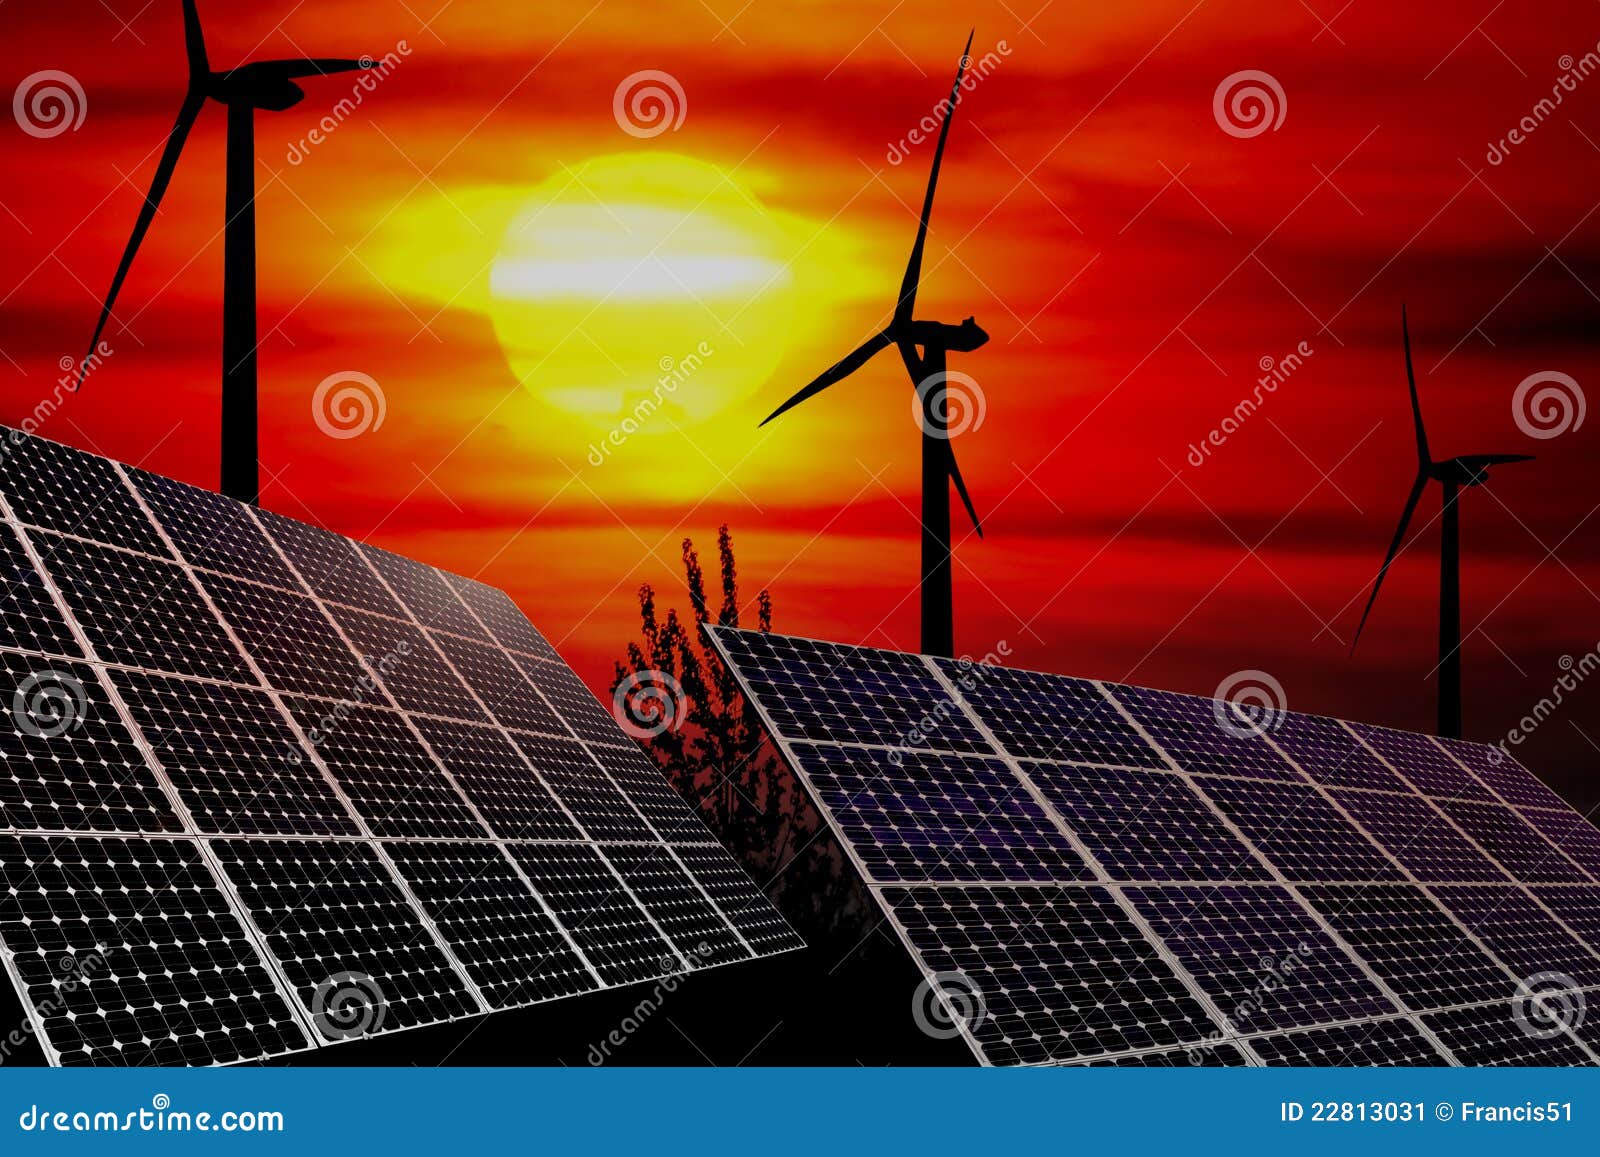 wind turbines and solar panels